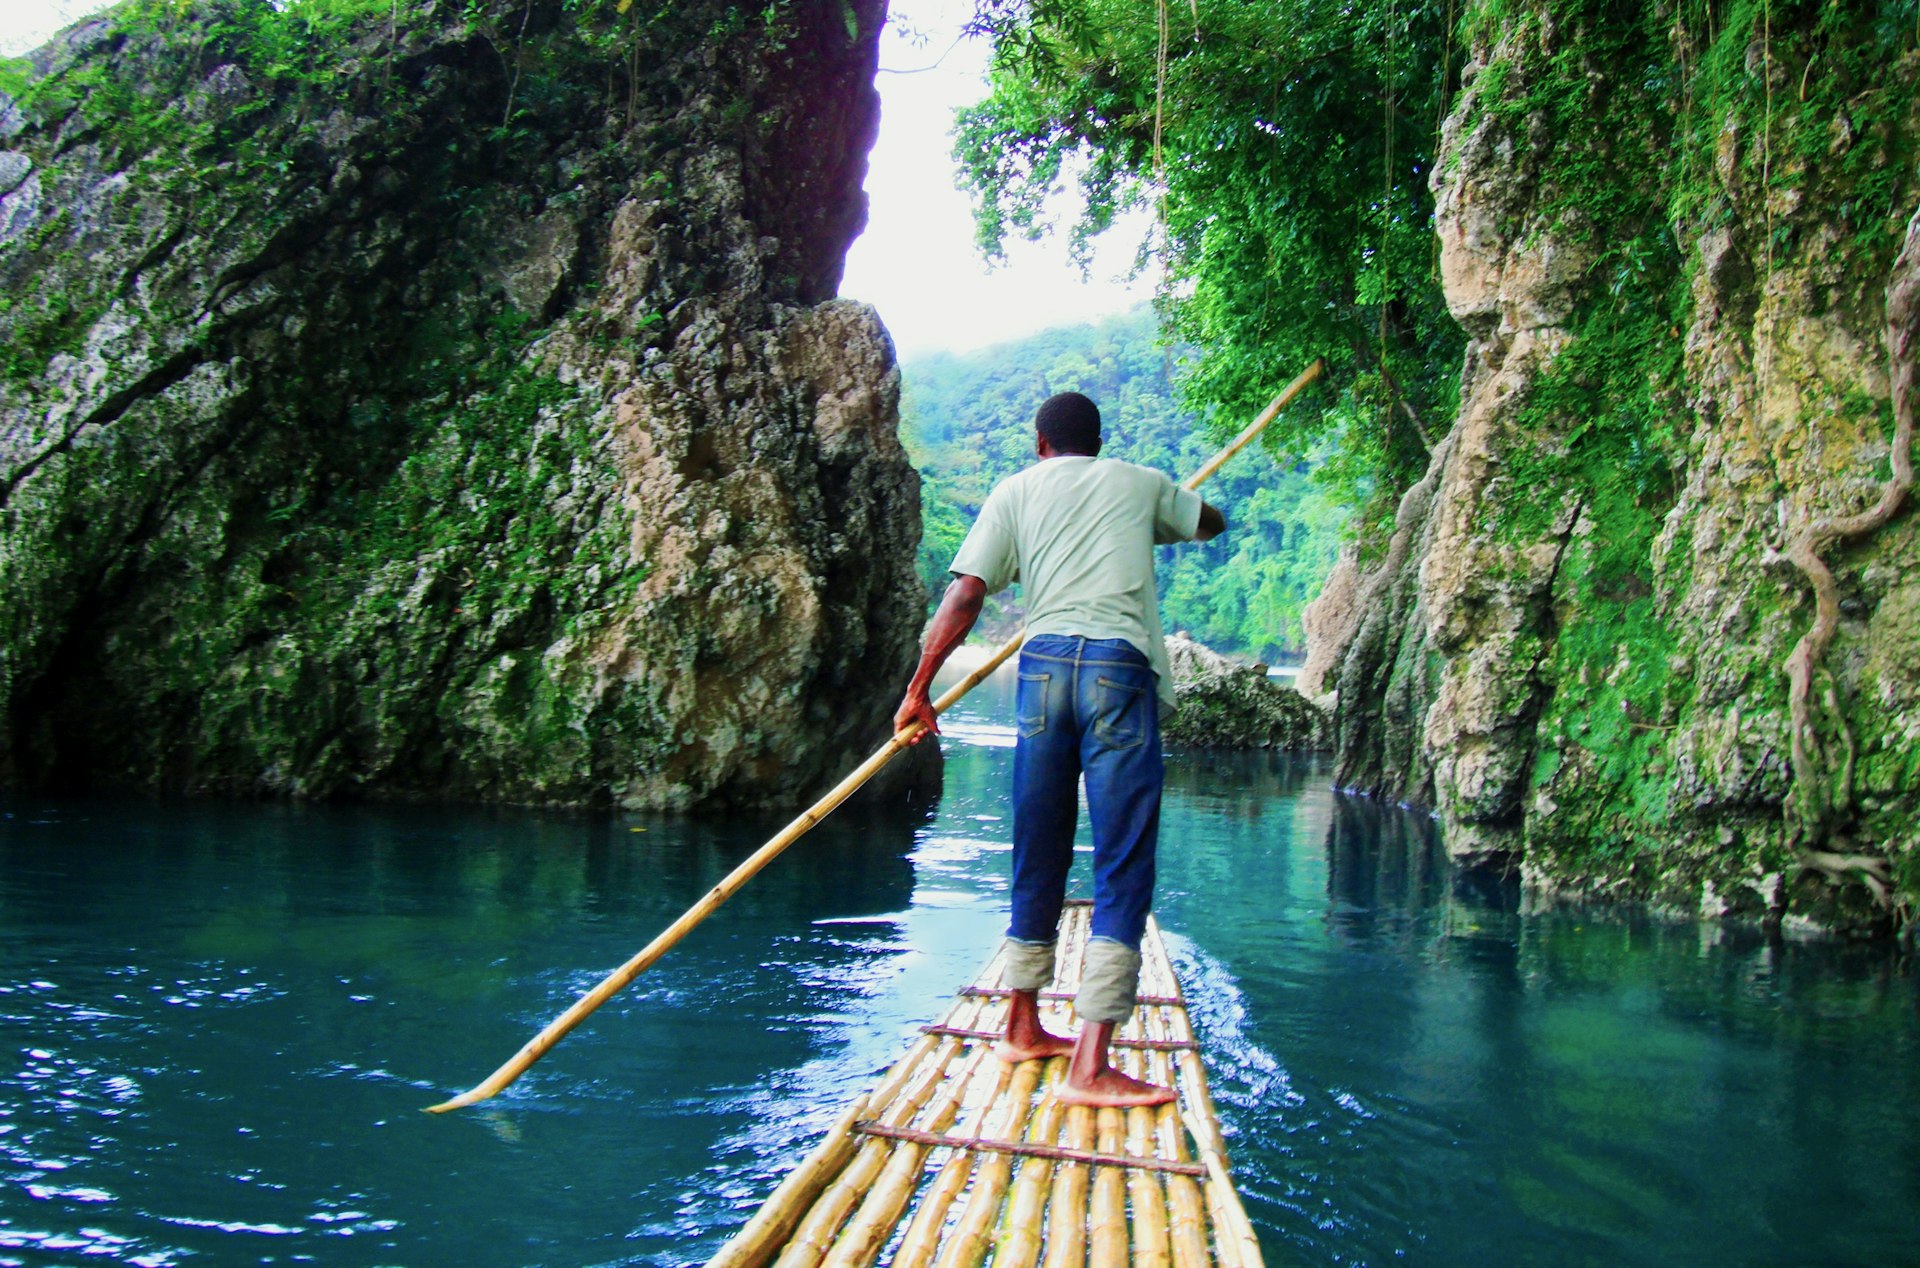 A man paddles along a river on a bamboo raft